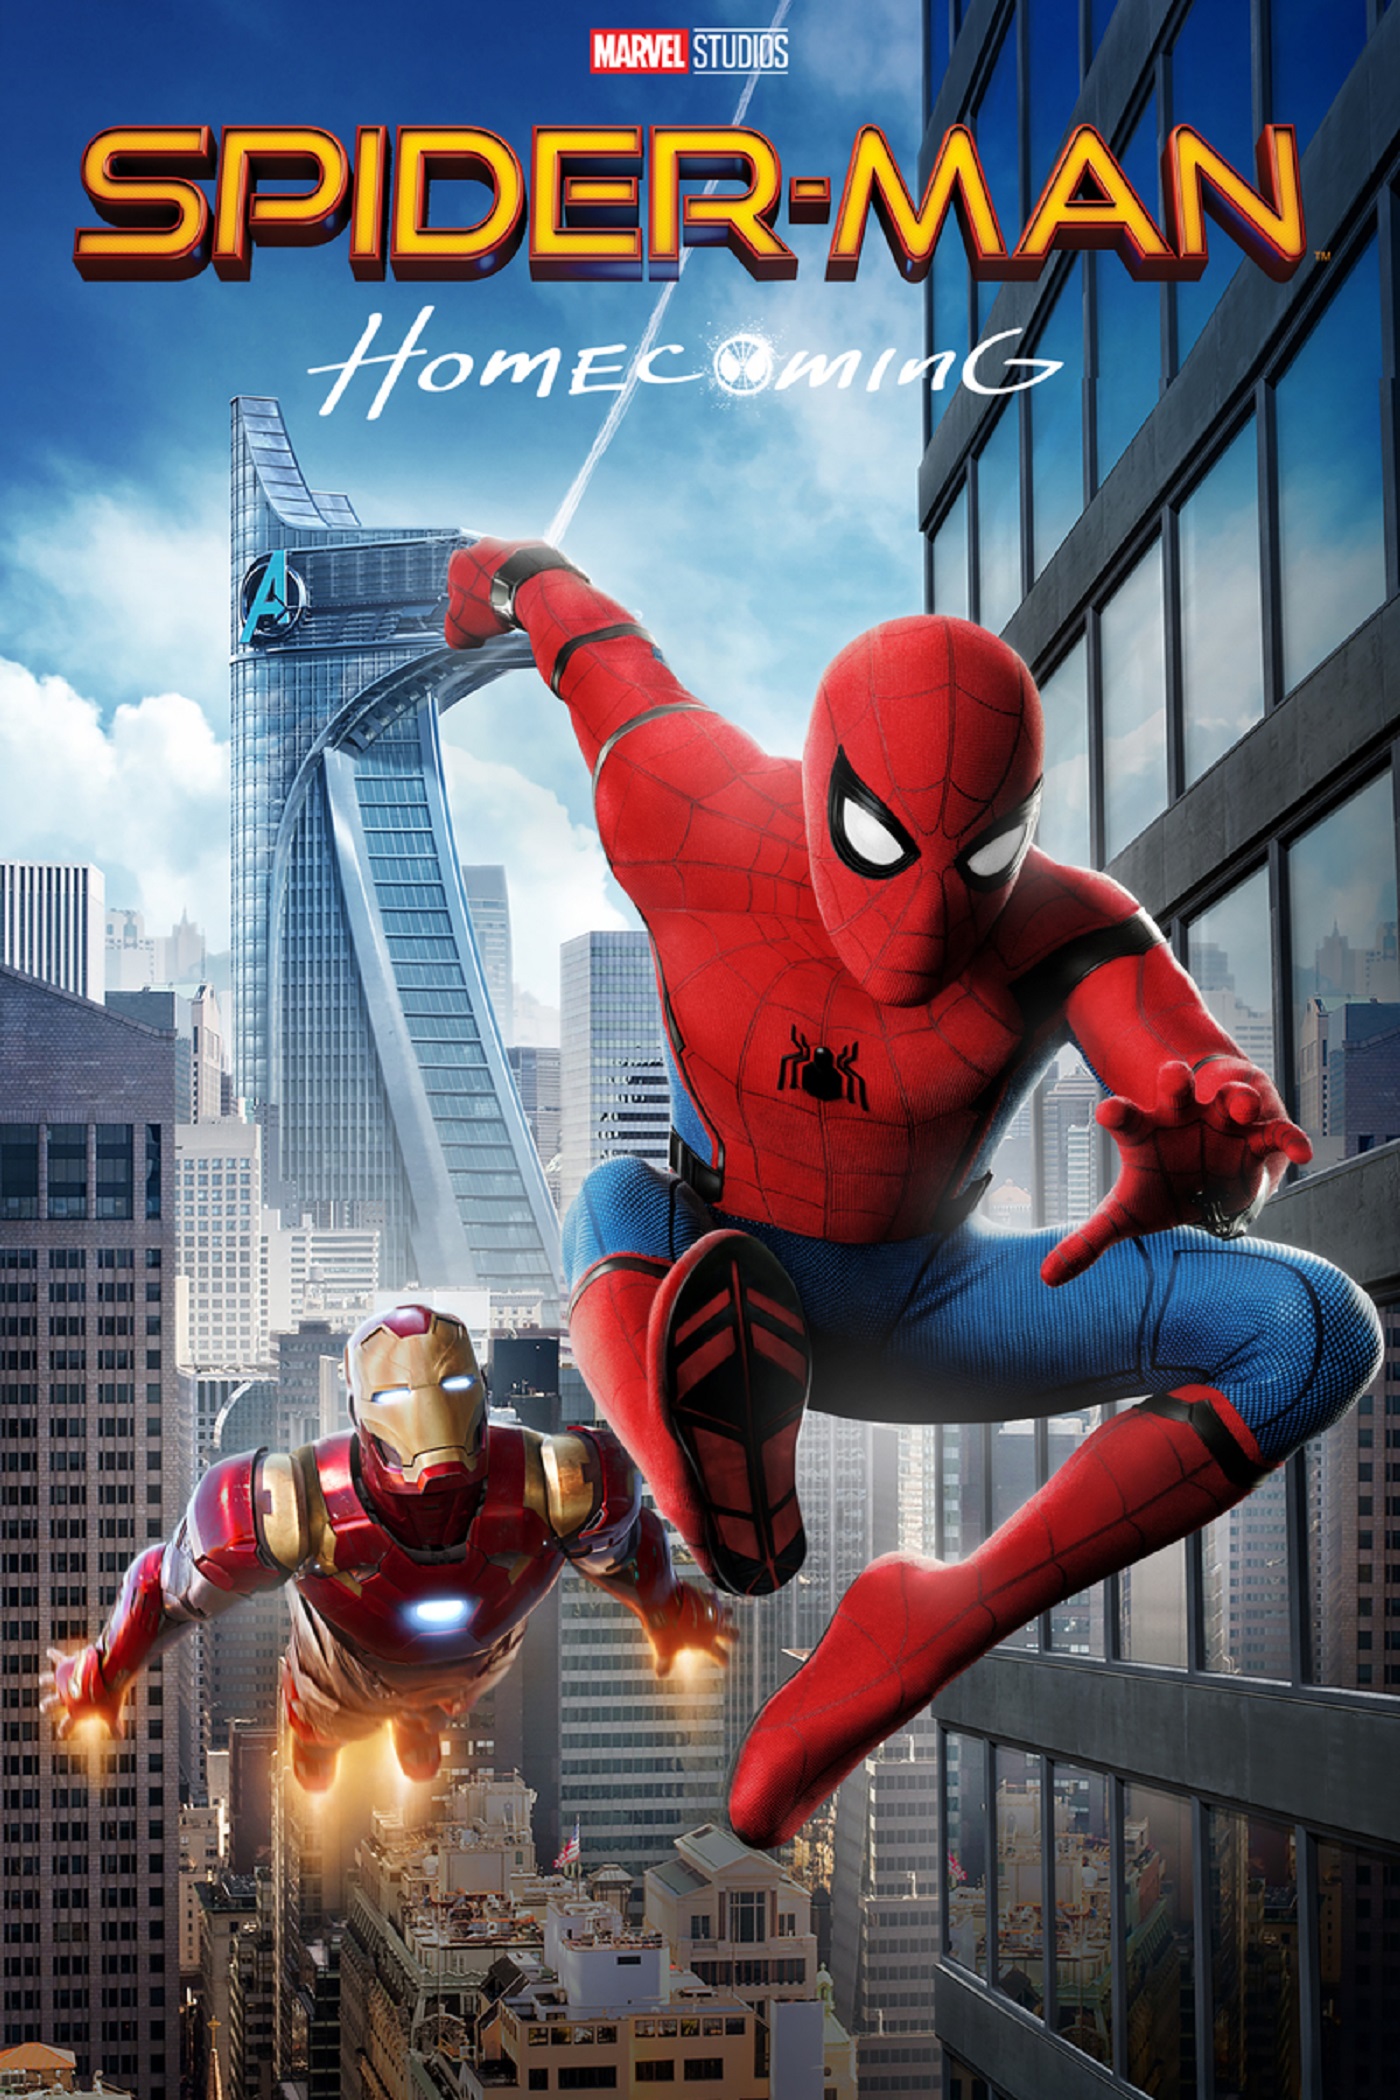 Spiderman: Homecoming